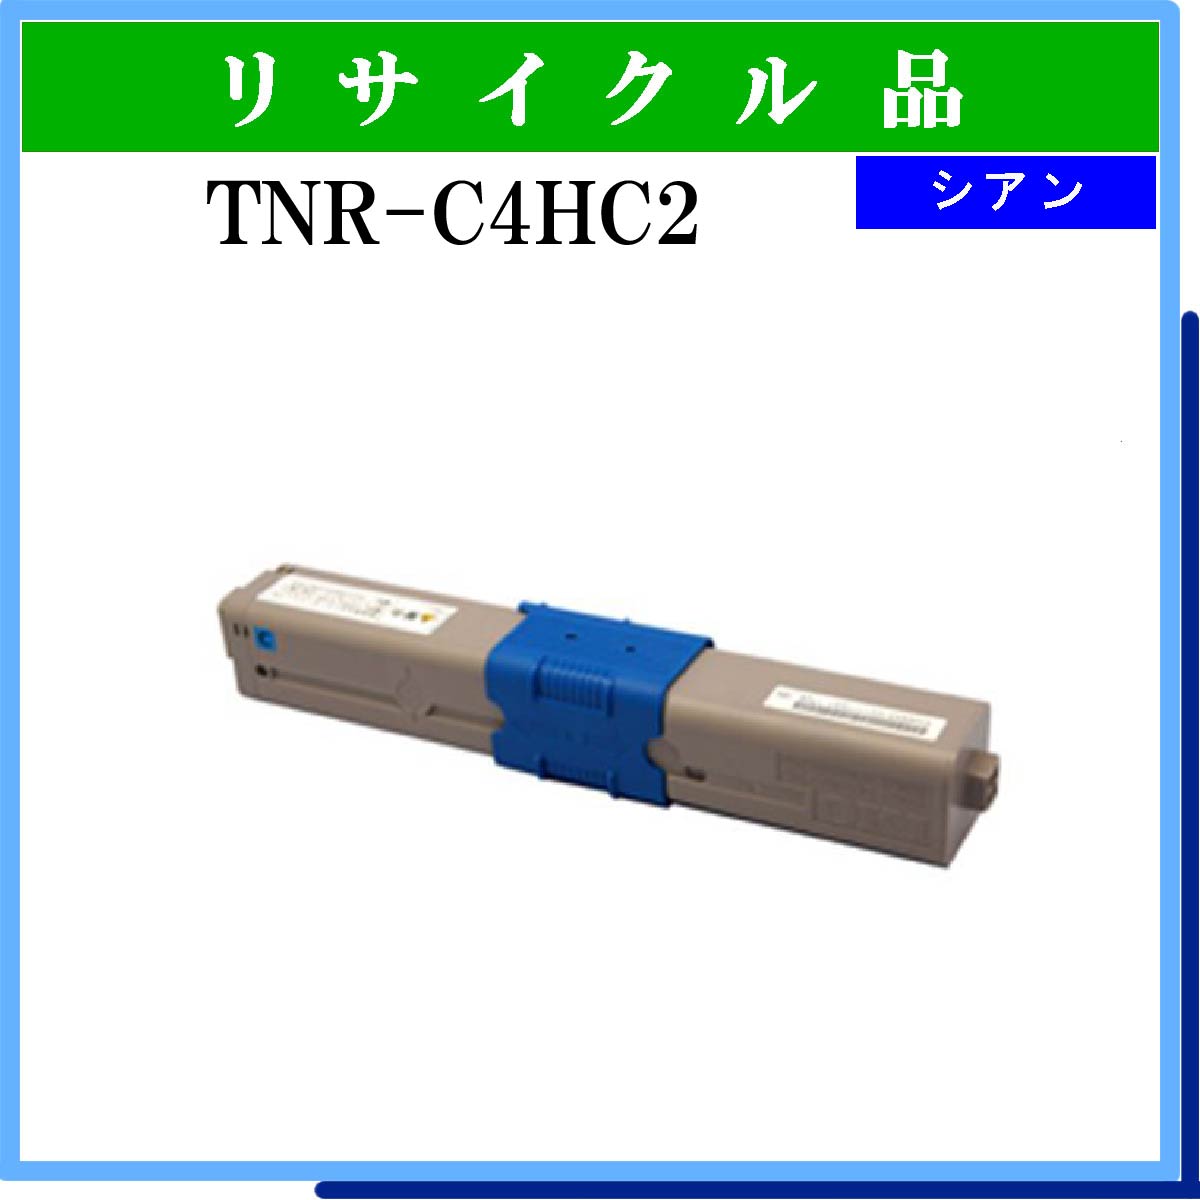 TNR-C4HC2